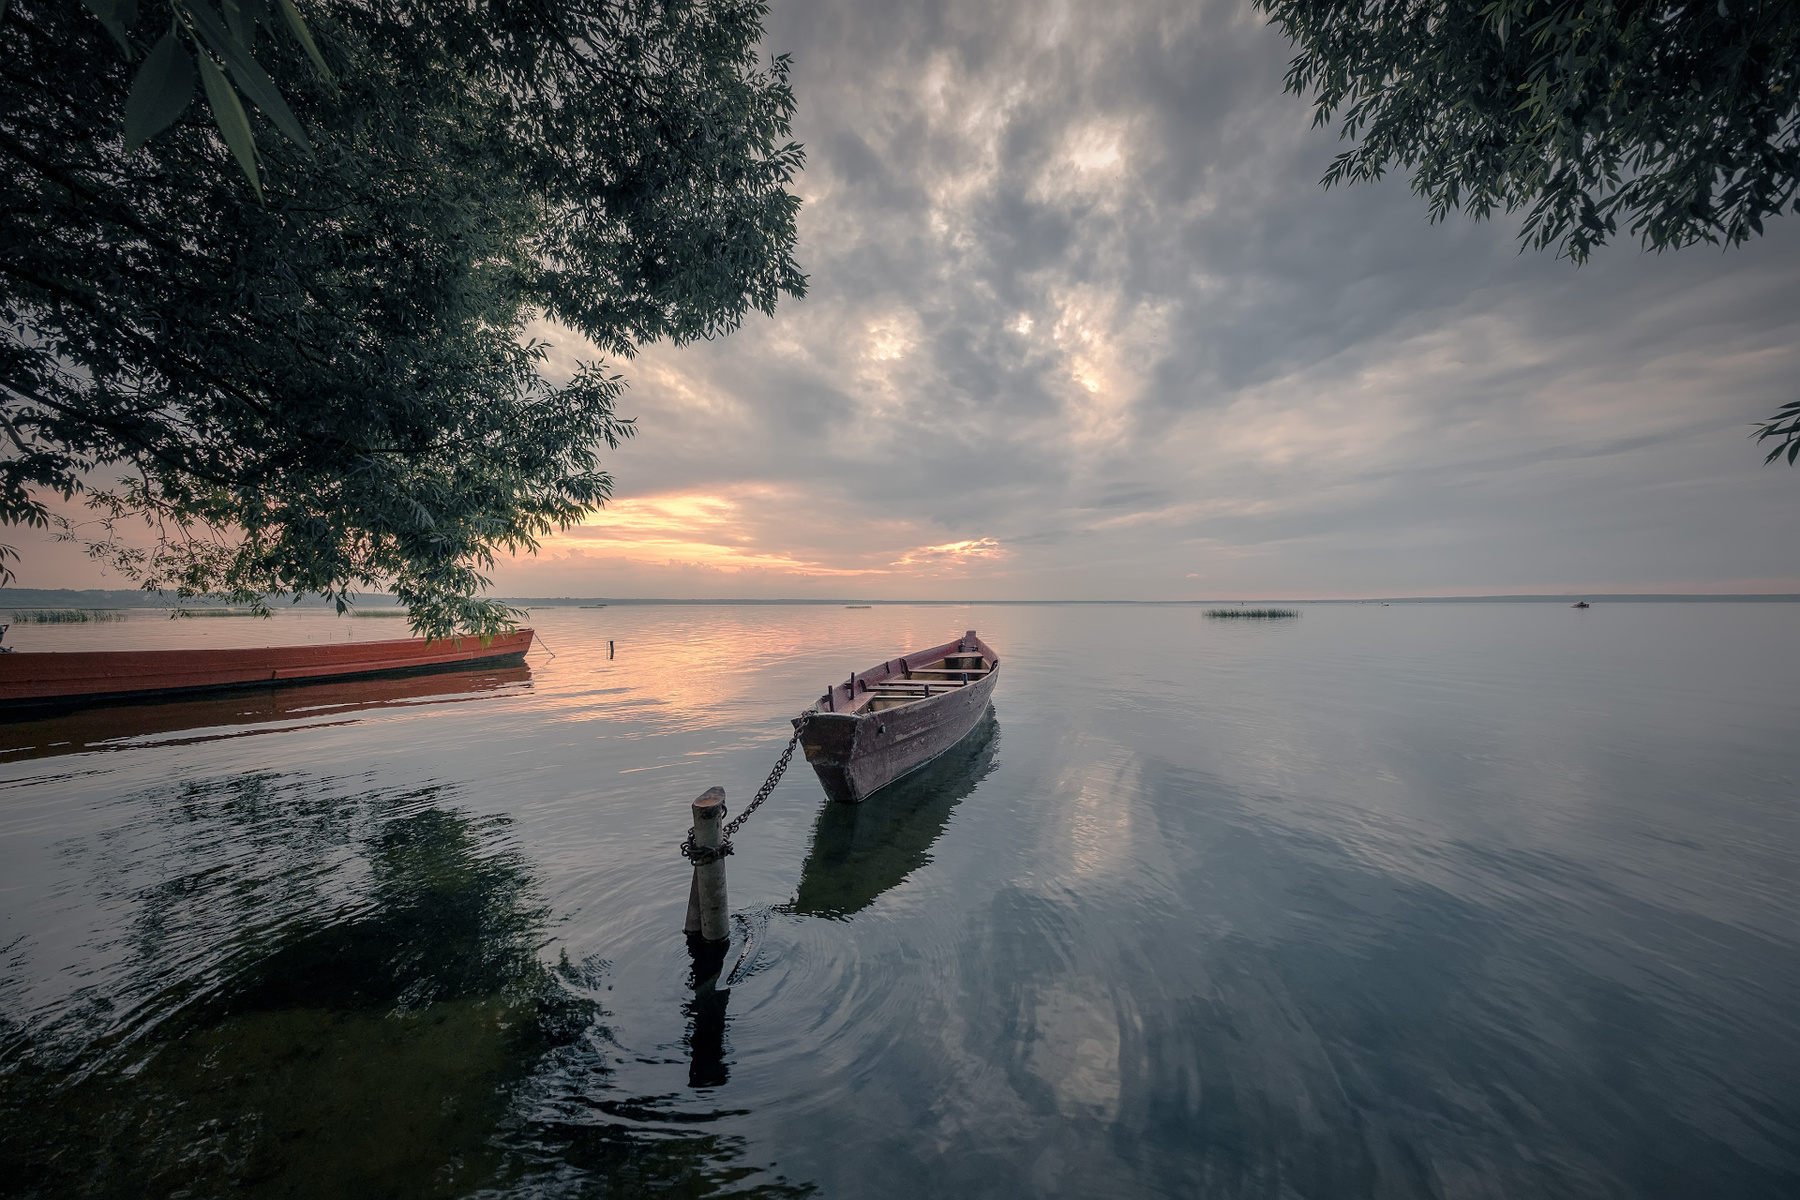 Лодки на закате озеро лодки закат деревья облака пейзаж природа переславль плещеево